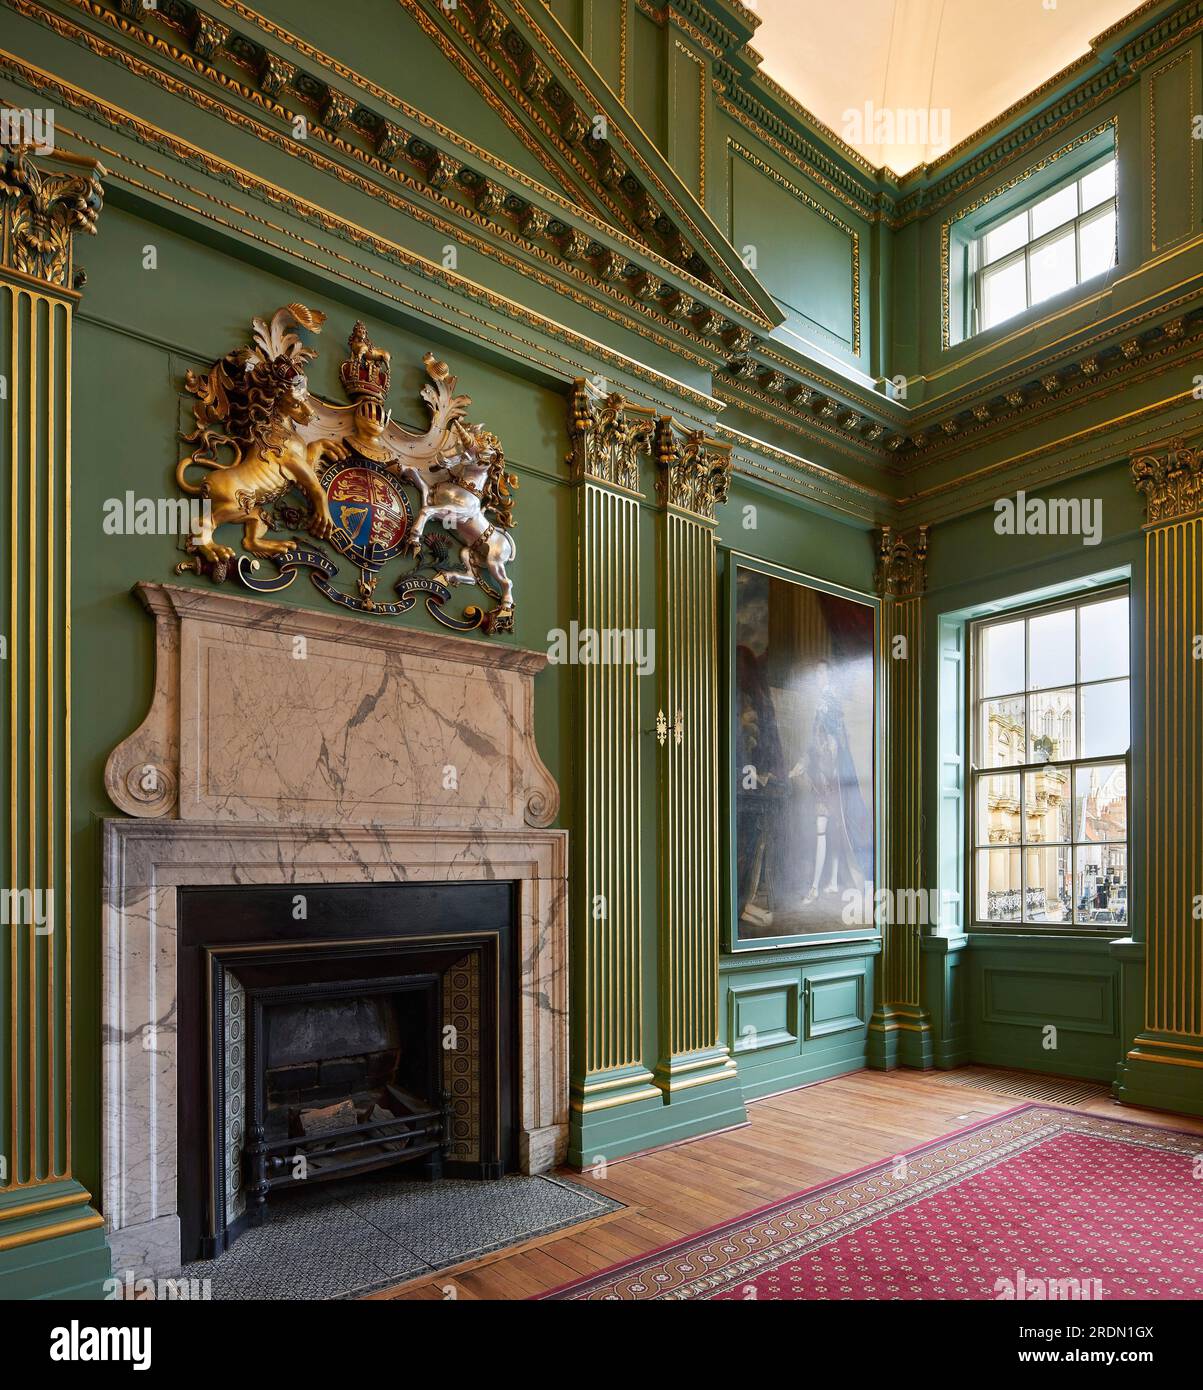 Marble mantelpiece in stateroom. York Mansion House, York, United Kingdom. Architect: De Matos Ryan, 2018. Stock Photo